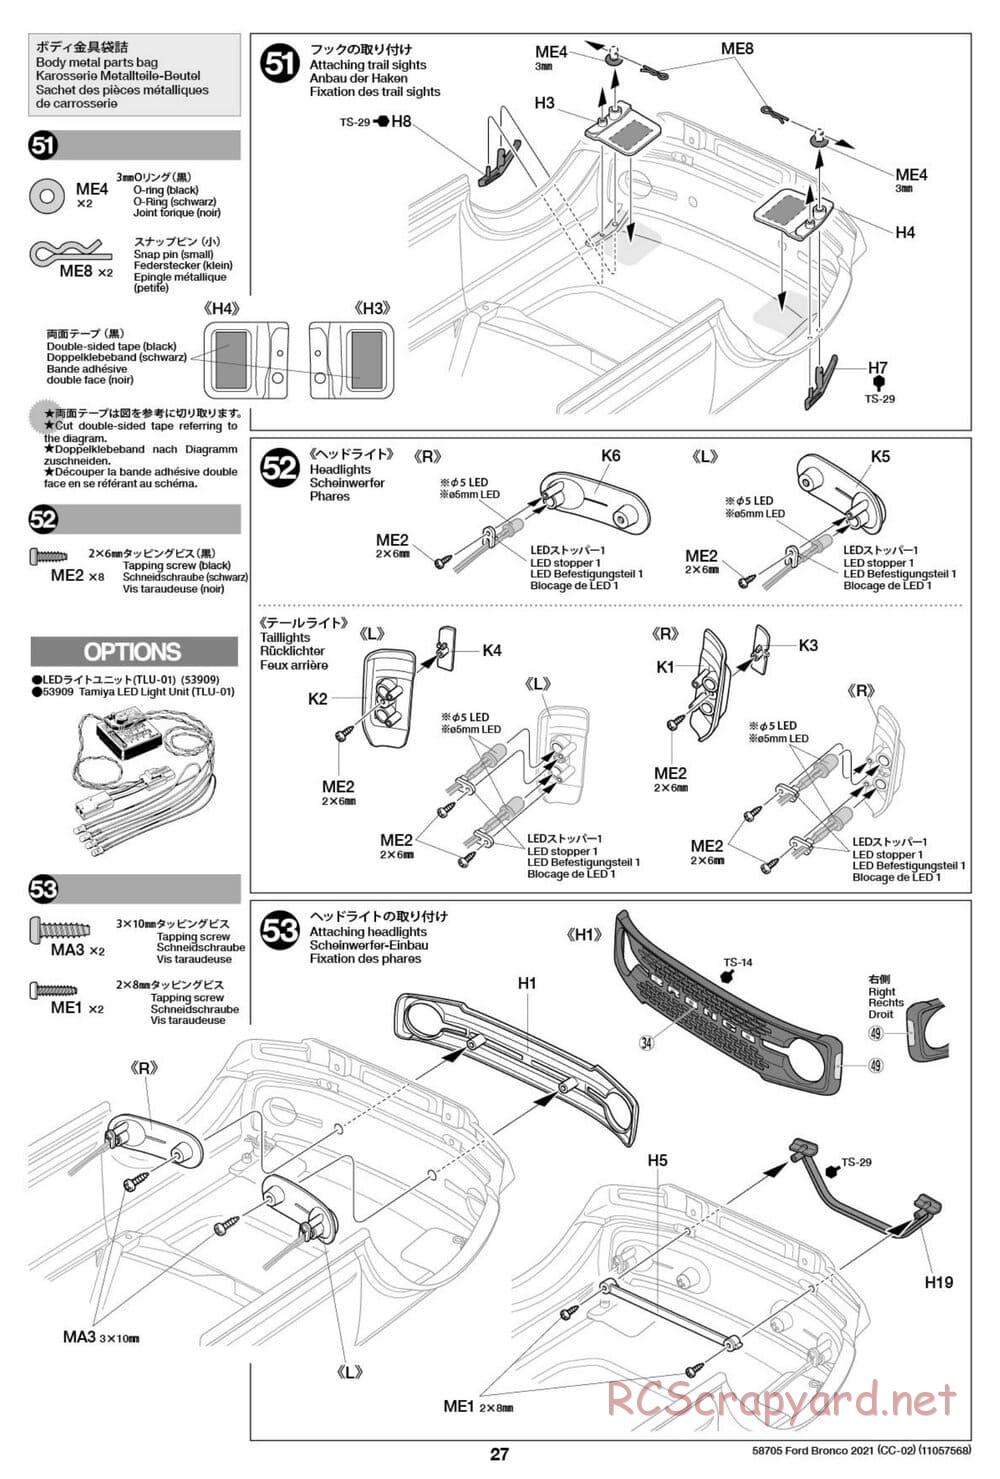 Tamiya - Ford Bronco 2021 - CC-02 Chassis - Manual - Page 27